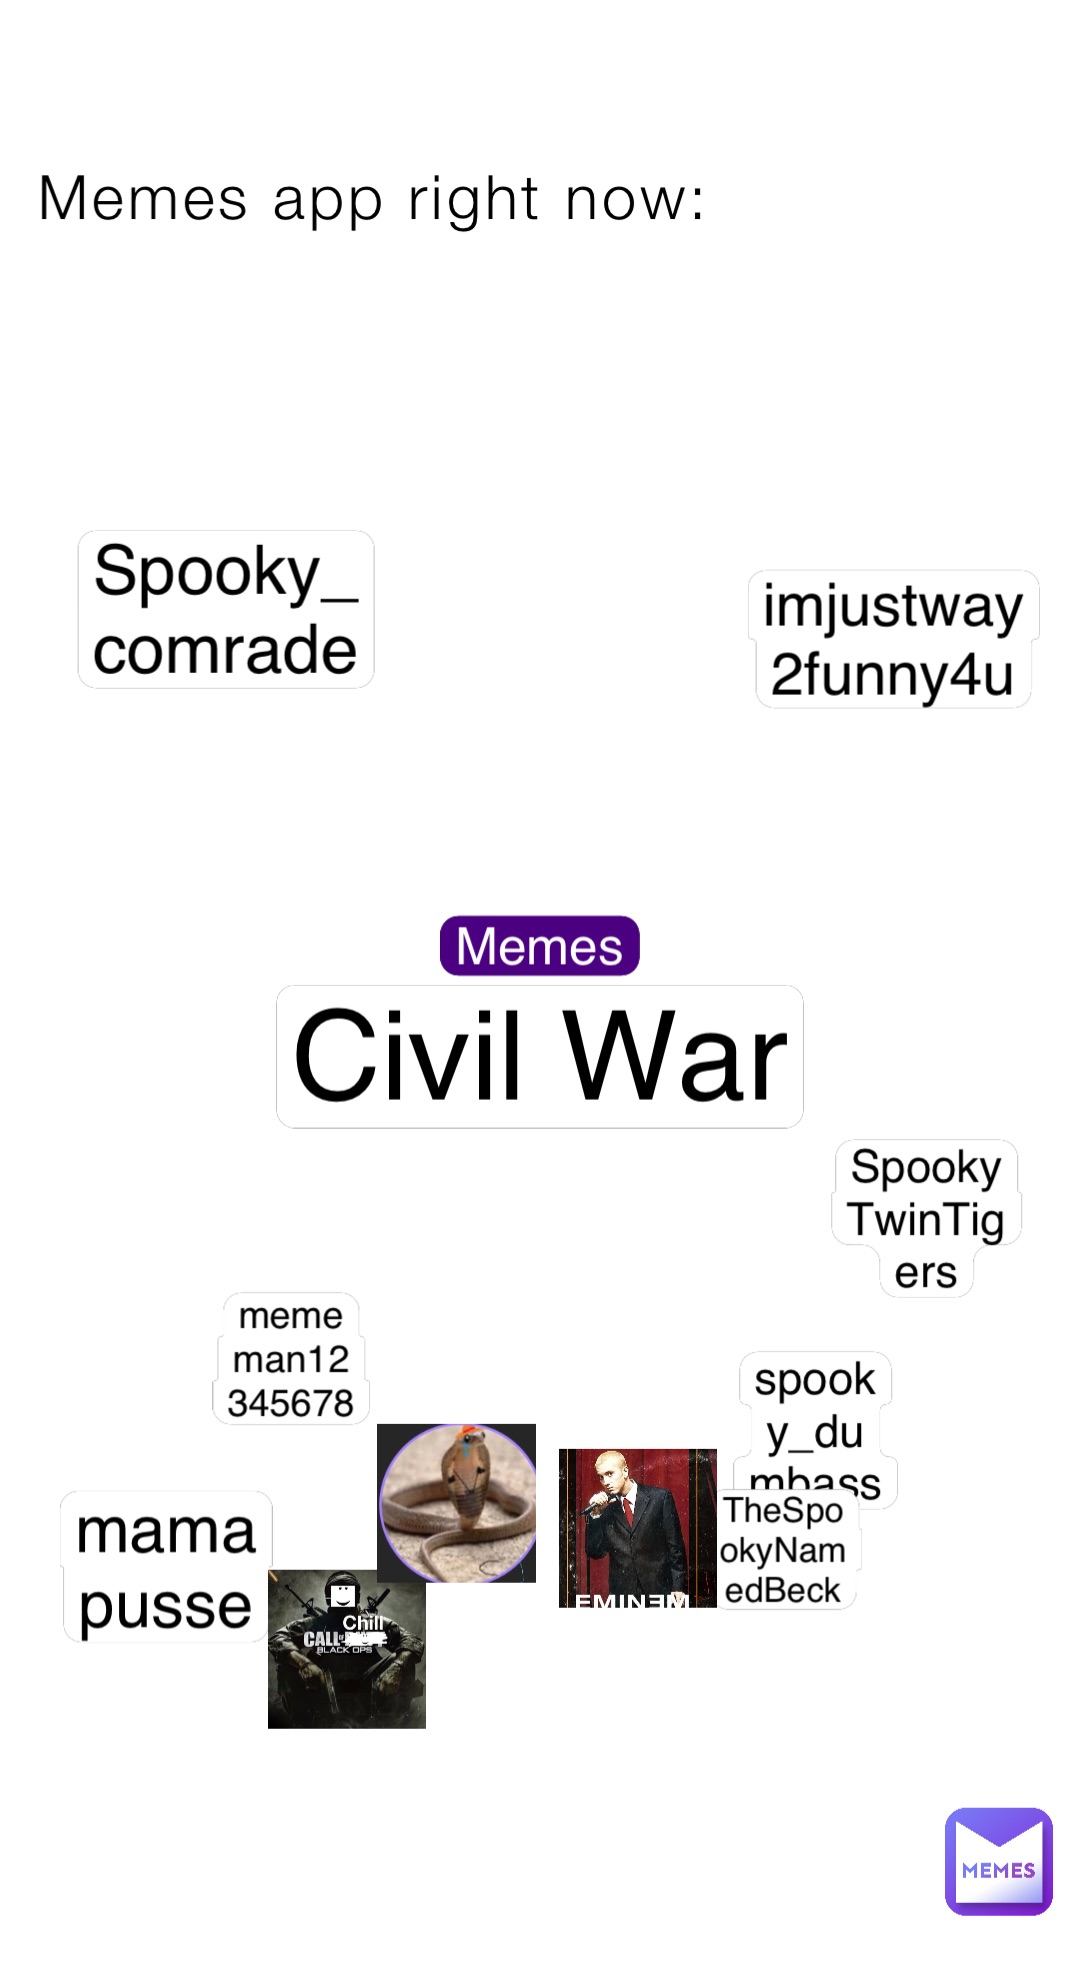 Memes app right now: Memes Civil War imjustway2funny4u SpookyTwinTigers Spooky_comrade spooky_dumbass TheSpookyNamedBeck mamapusse mememan12345678